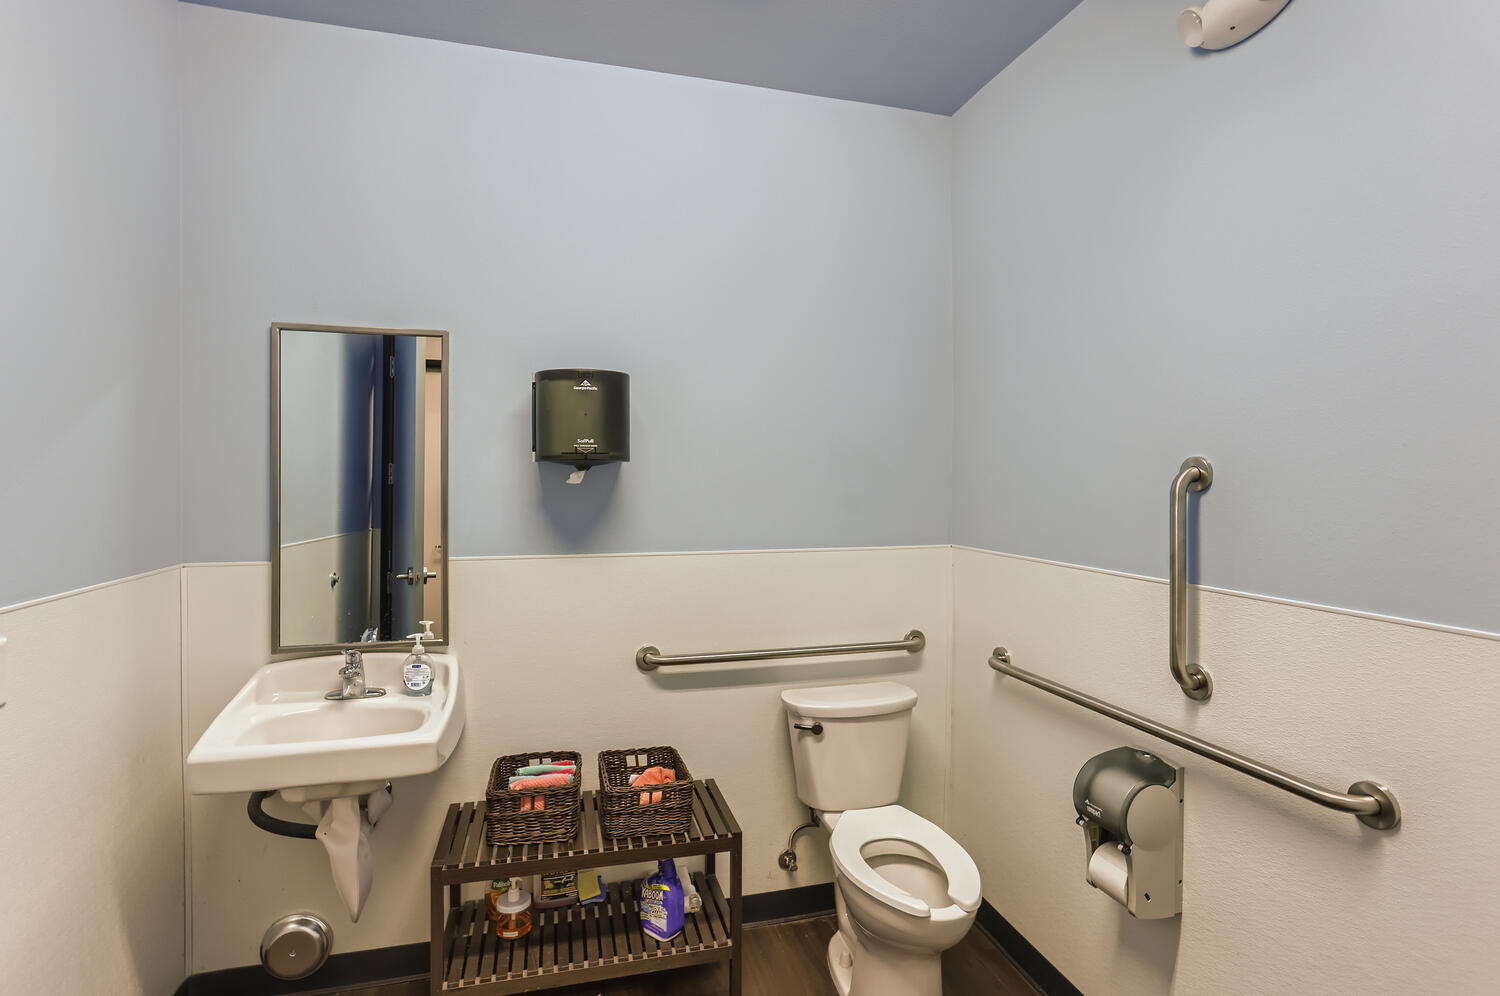 Clean and comfortable bathroom facilities.